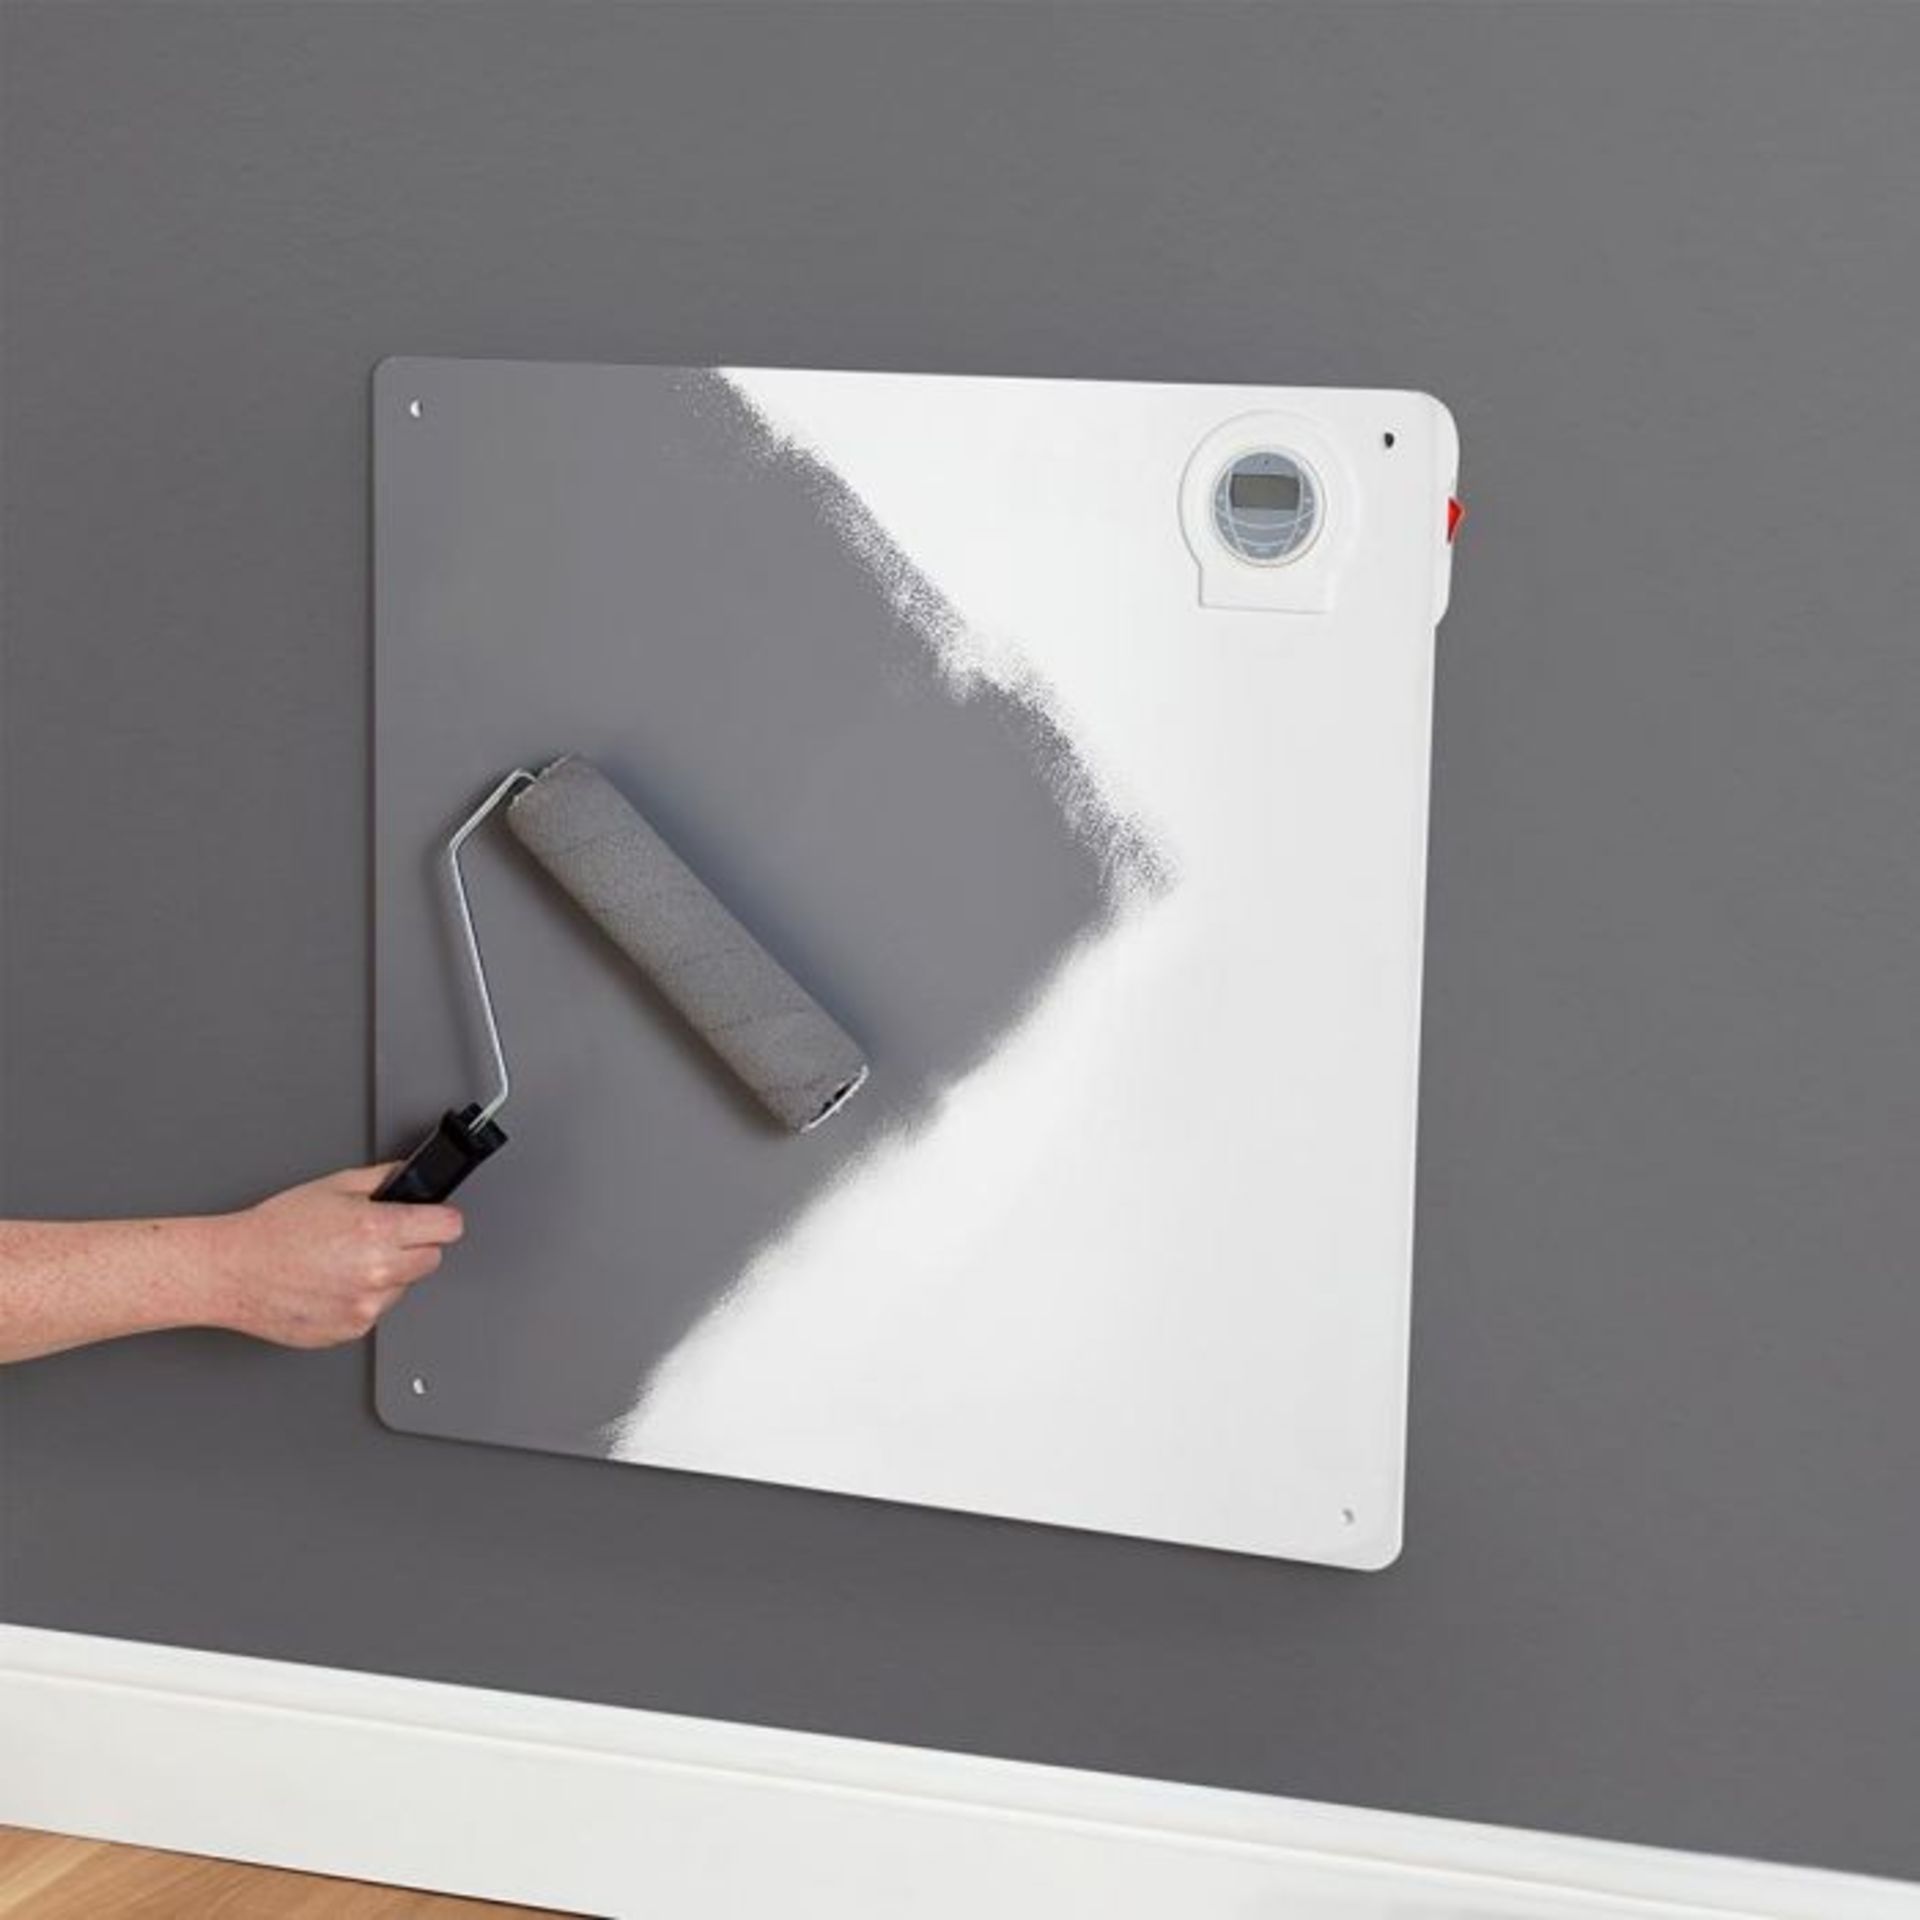 425W Ceramic Panel Heater. This energy-efficient 425W ceramic panel heater is perfect for - Image 3 of 4